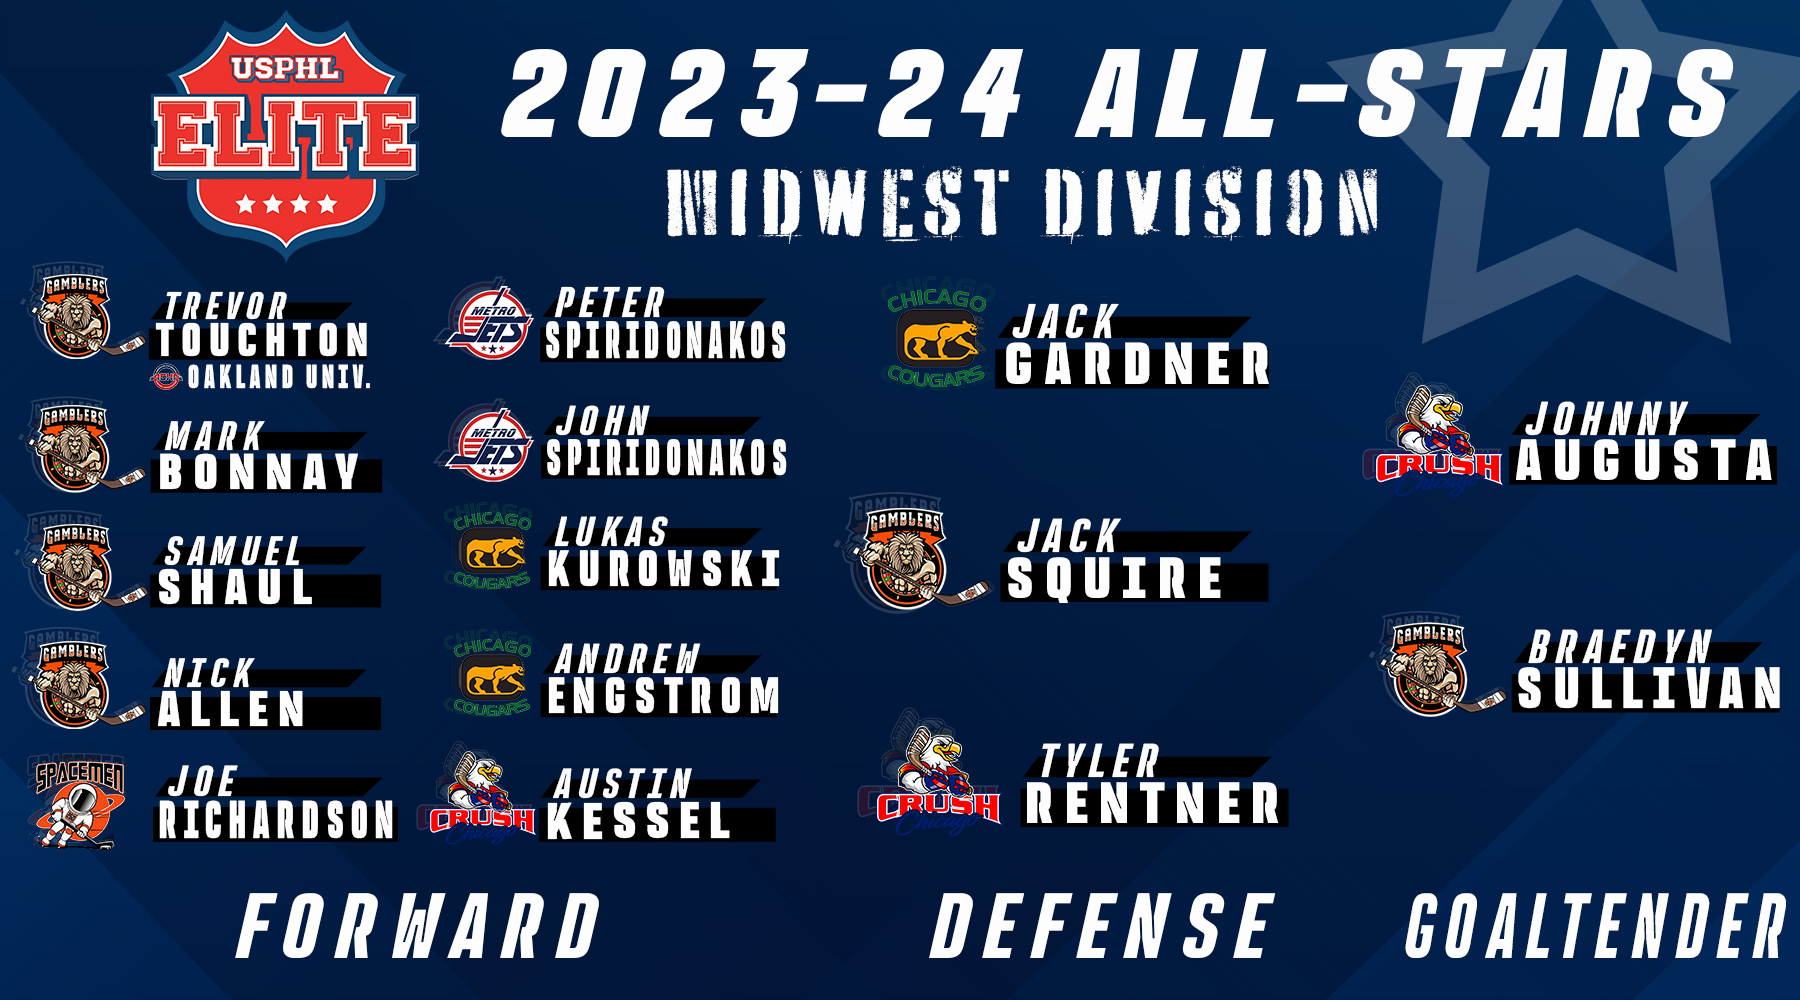 USPHL Elite 2023-24 Midwest Division All-Stars